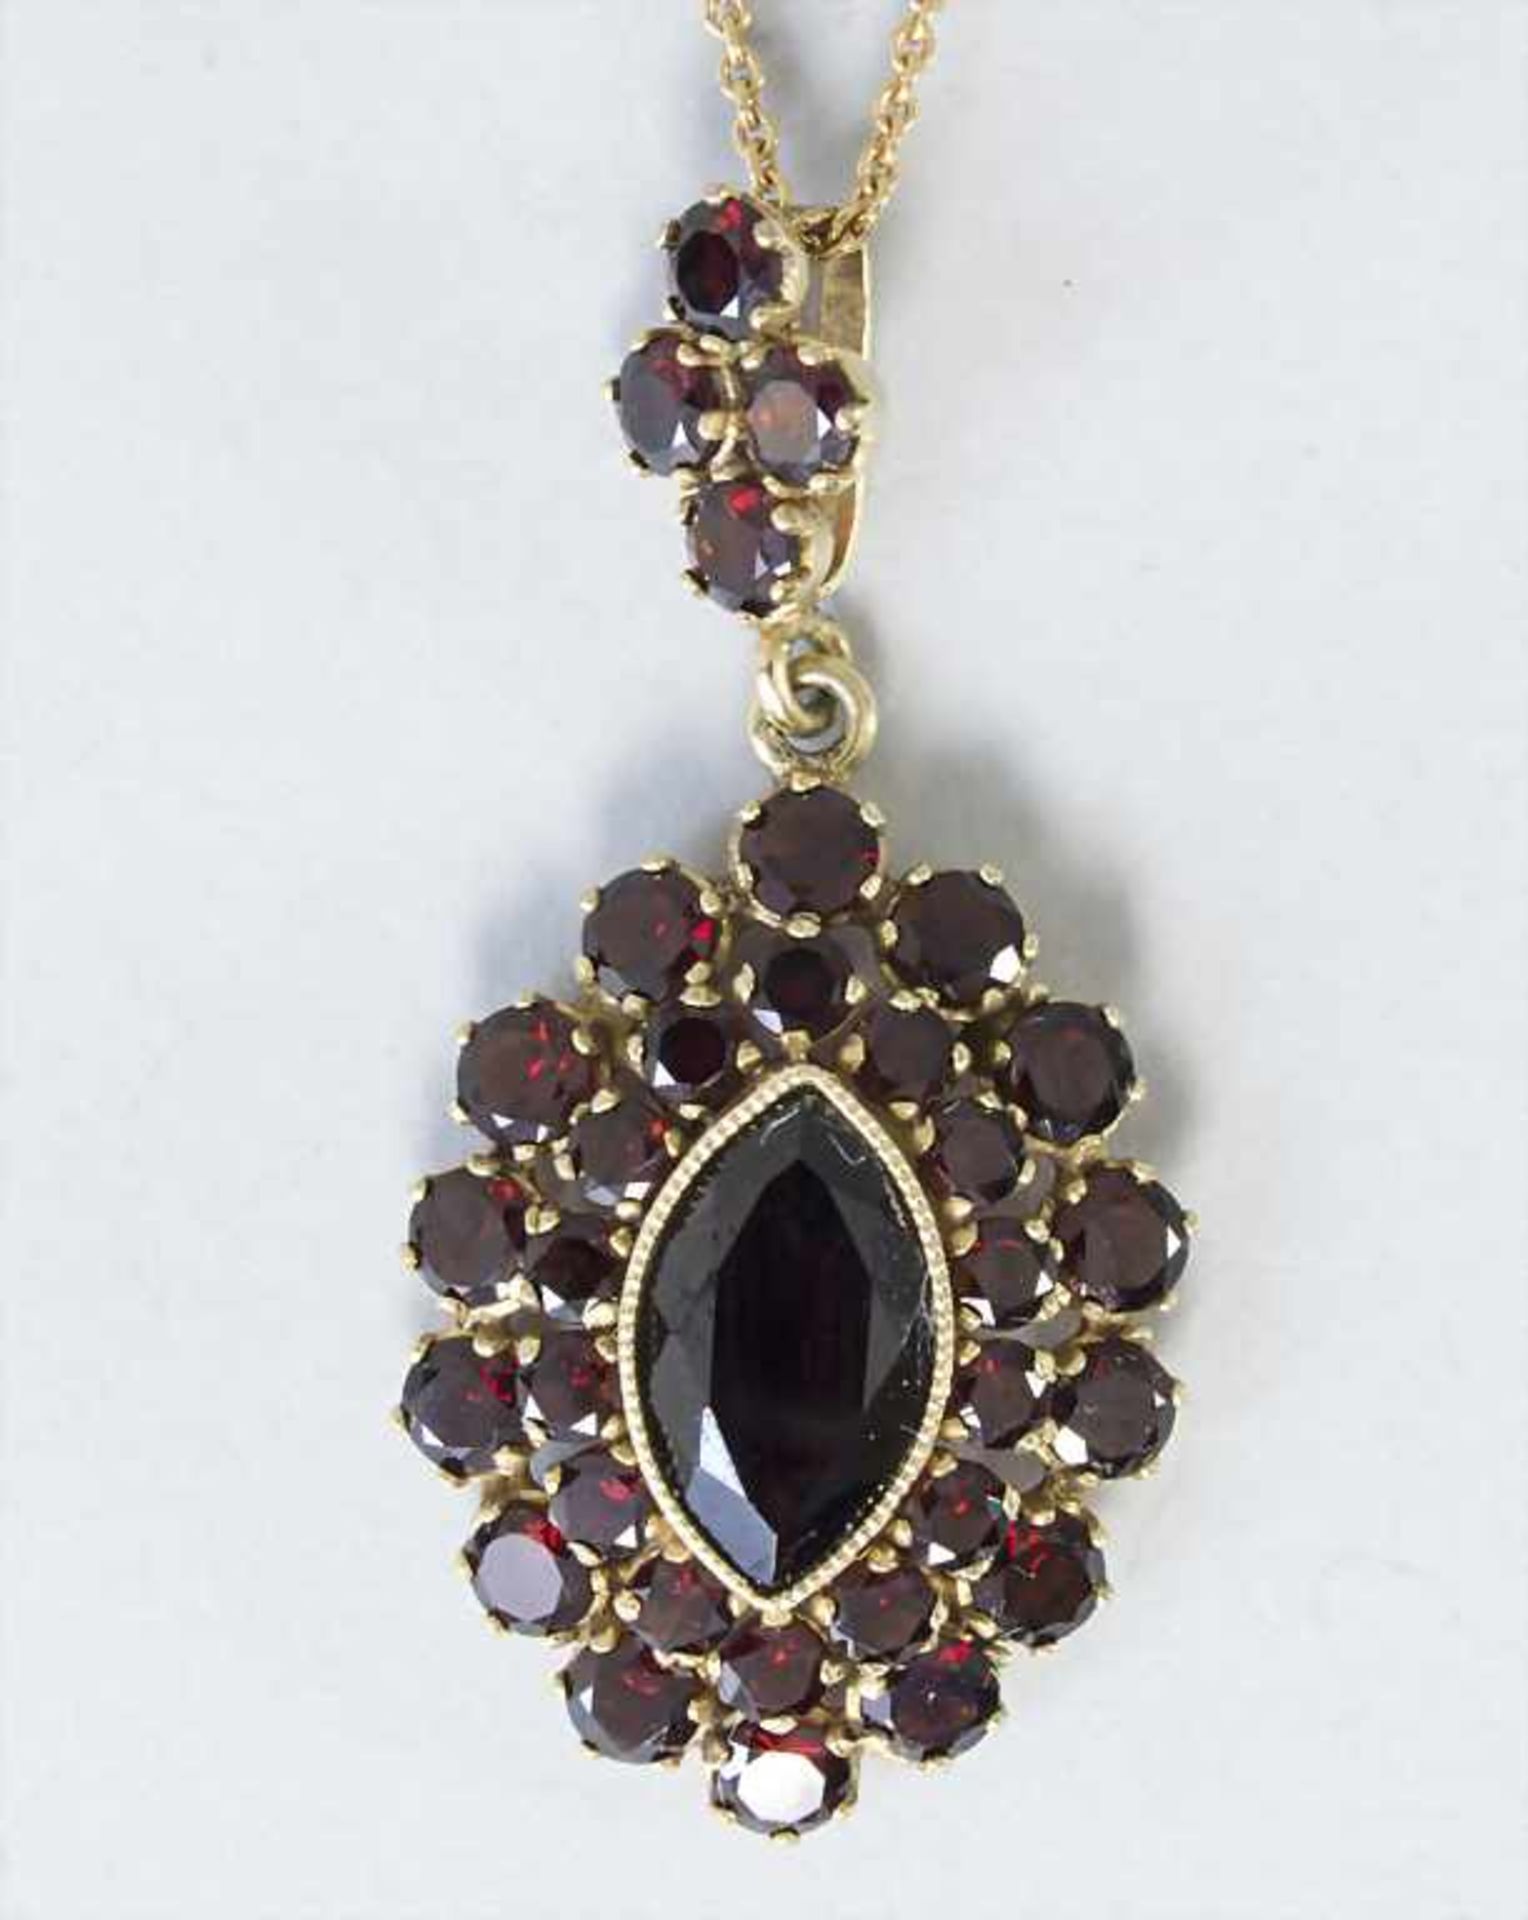 Goldkette mit Granatanhänger / A gold necklace with garnet pendant